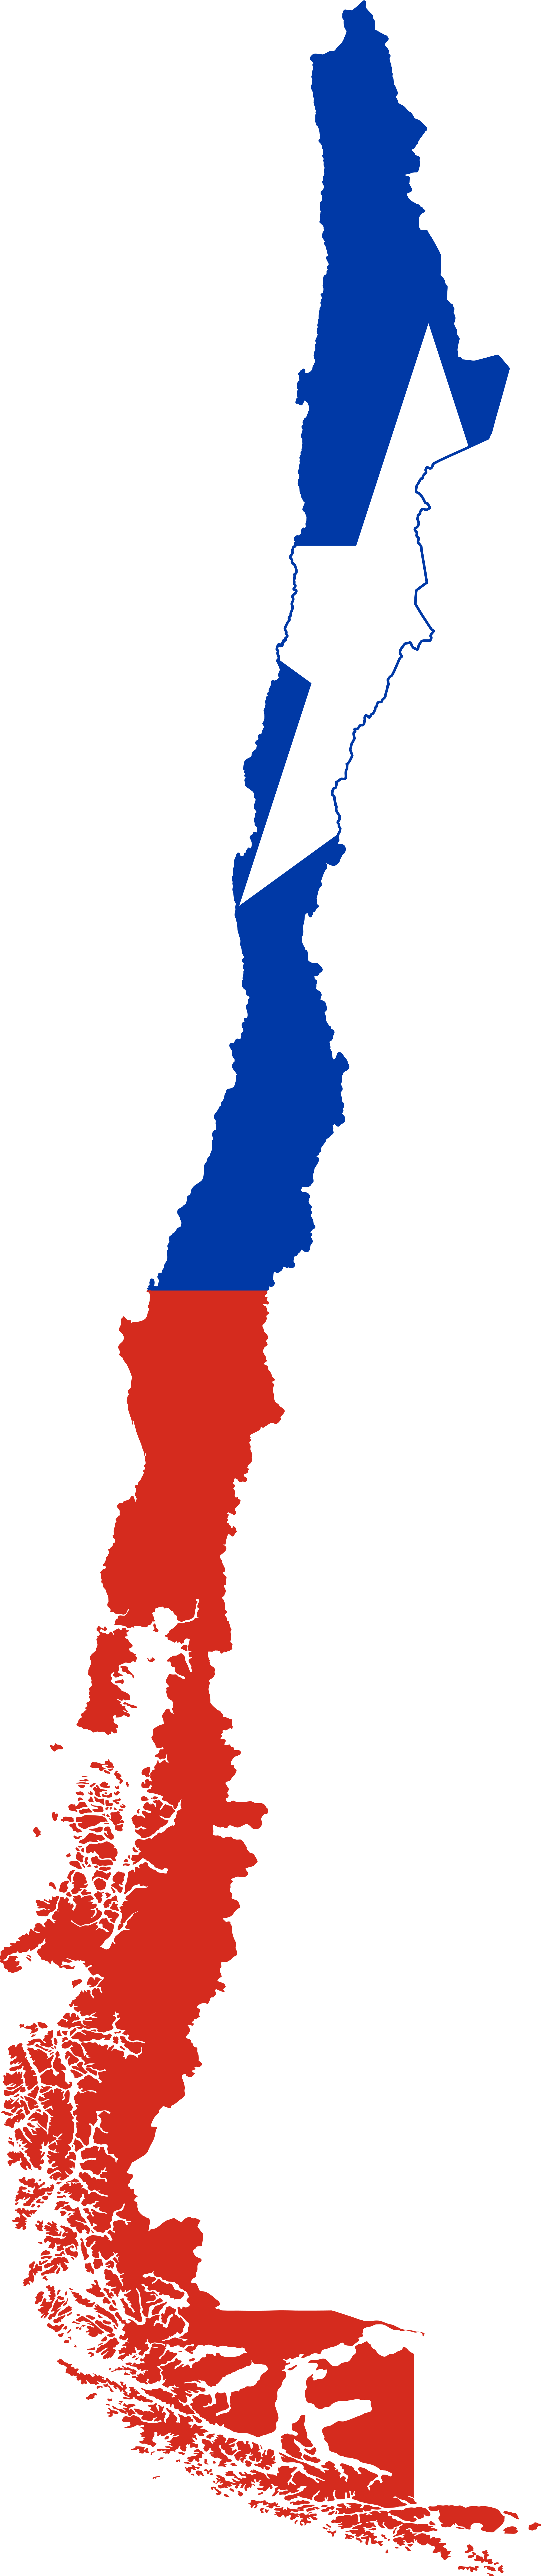 Logo Gobierno de Chile.png